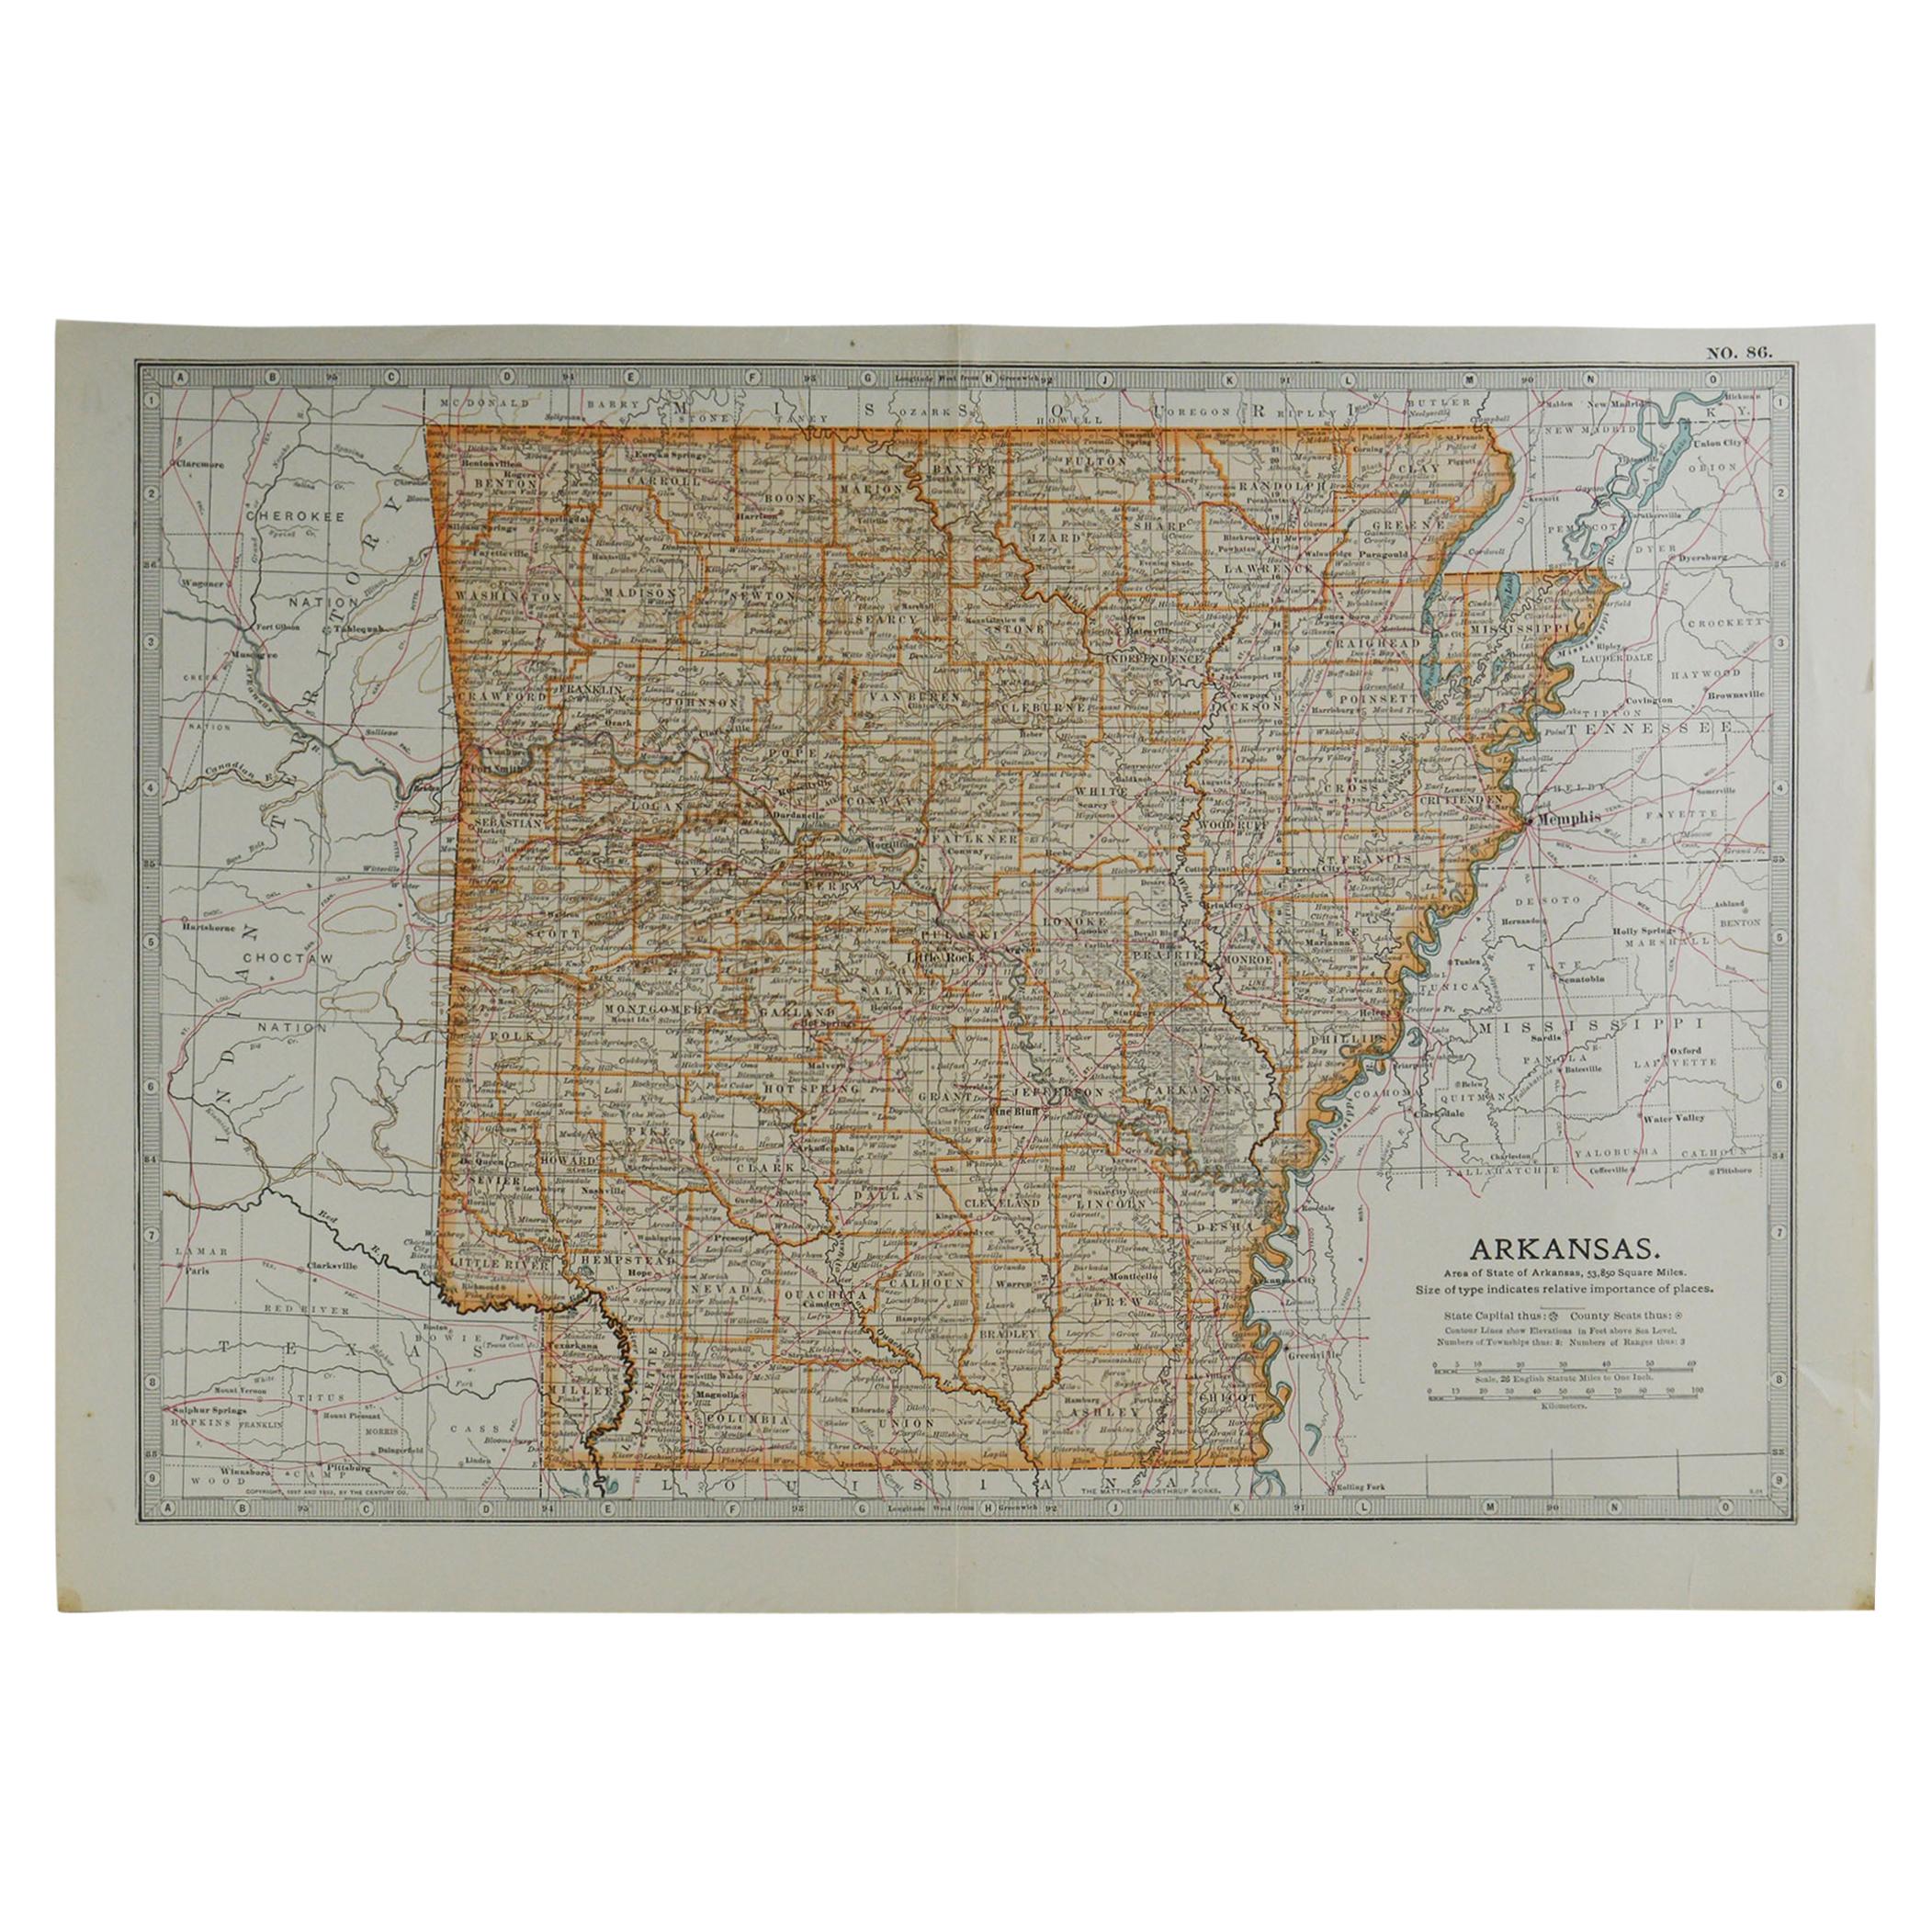 Original Antique Map of Arkansas, circa 1890